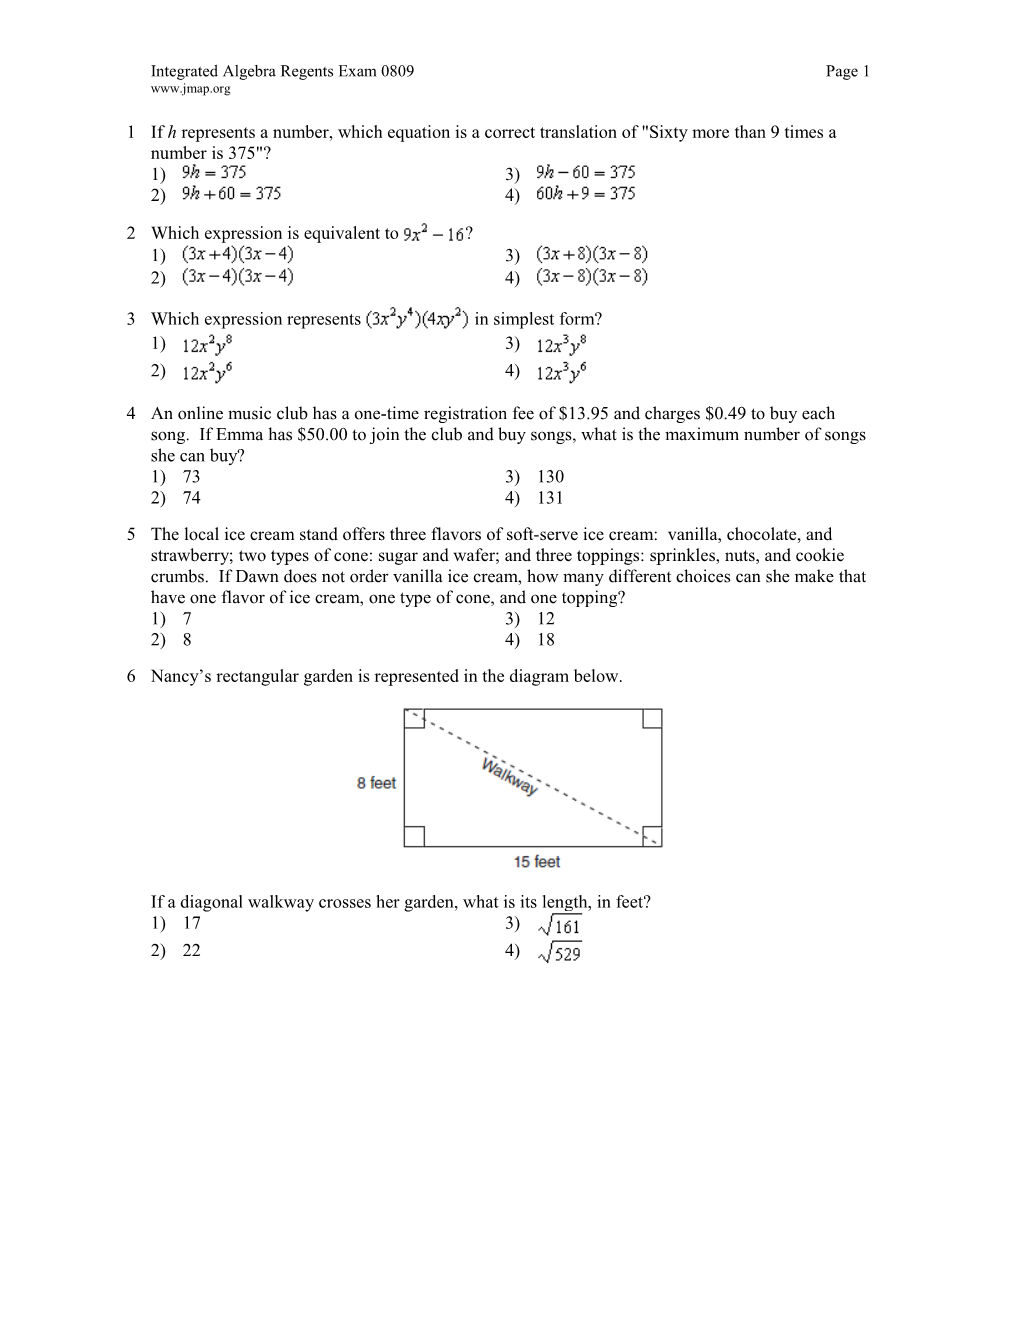 August 2009 Integrated Algebra Regents Exam